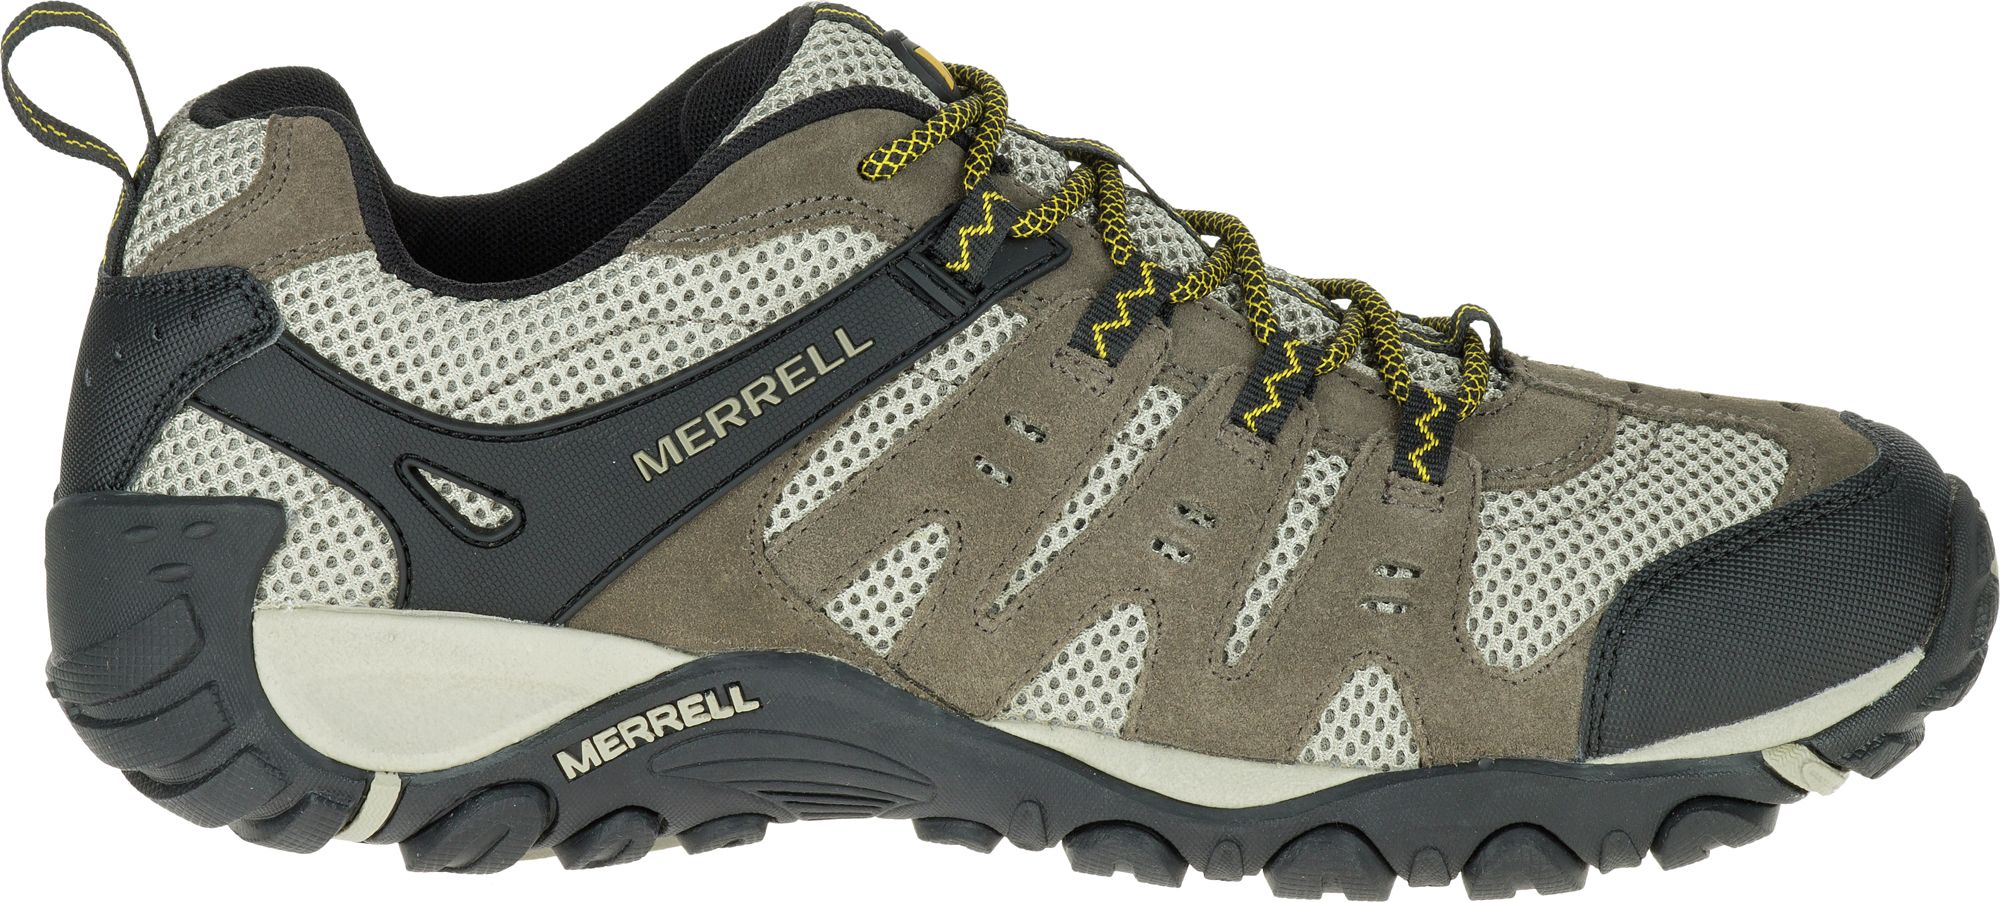 merrell men's accentor shoes